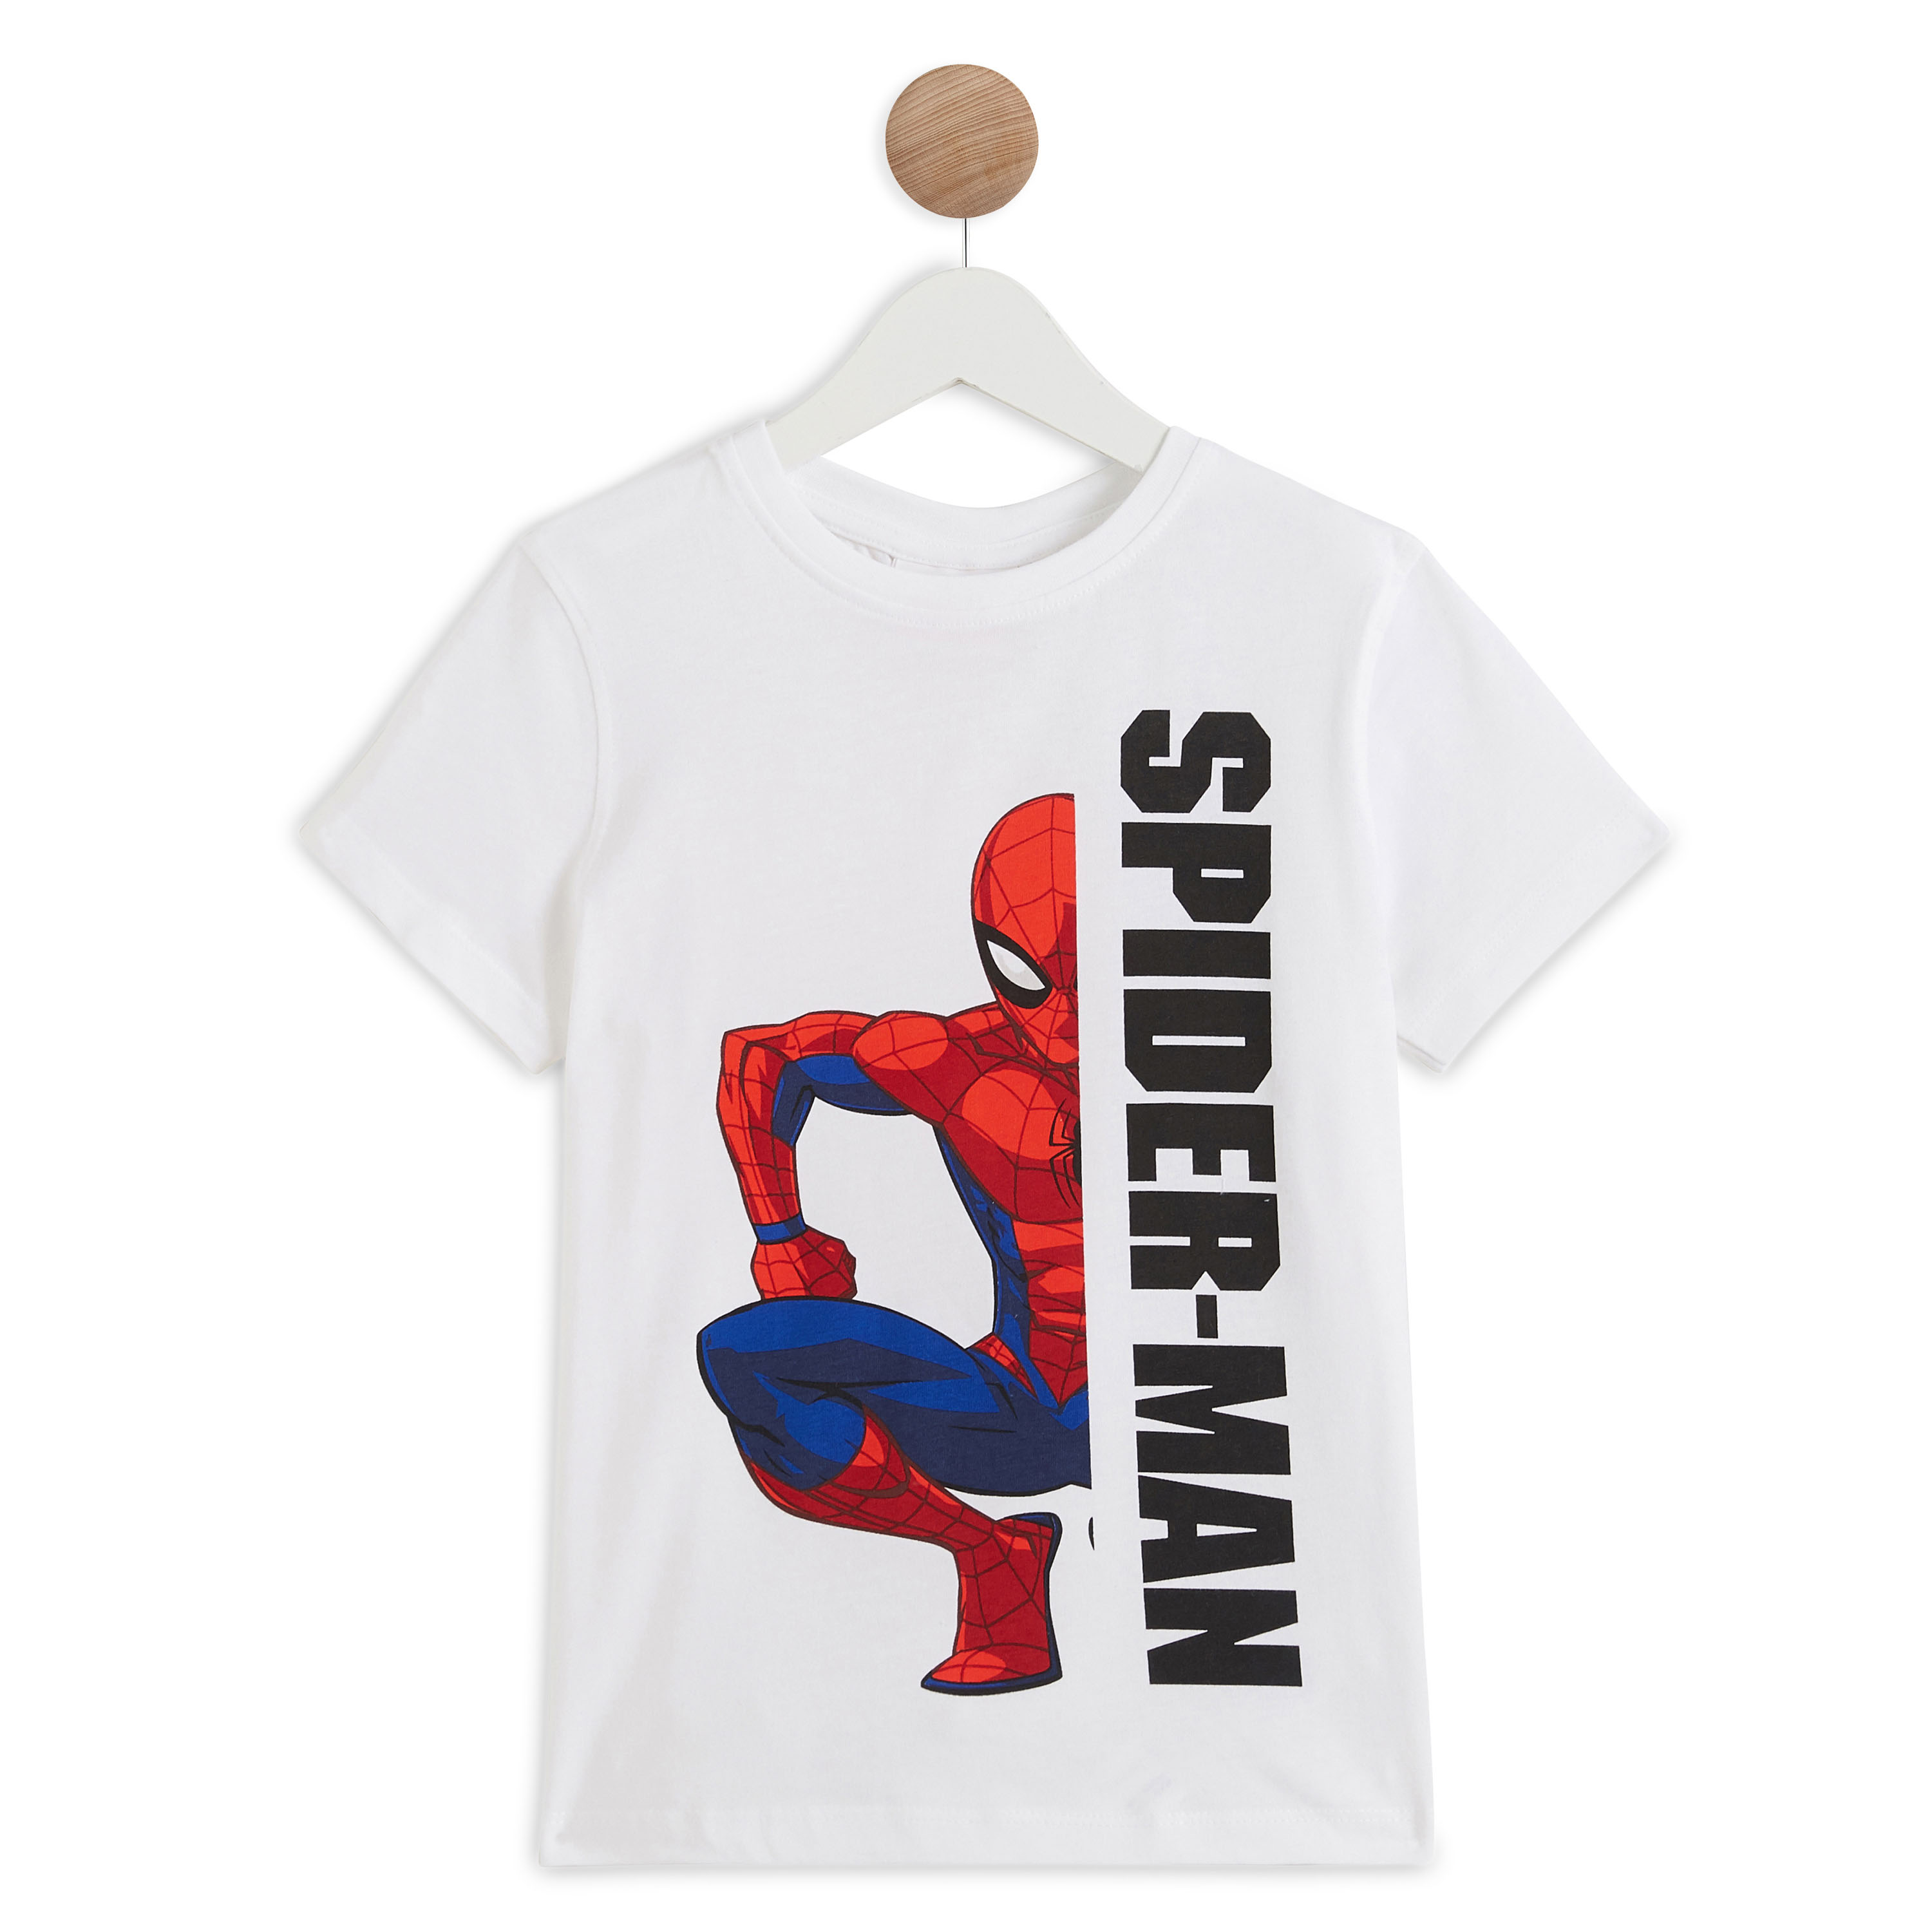 Garçon Spiderman Shirt Manches Courtes